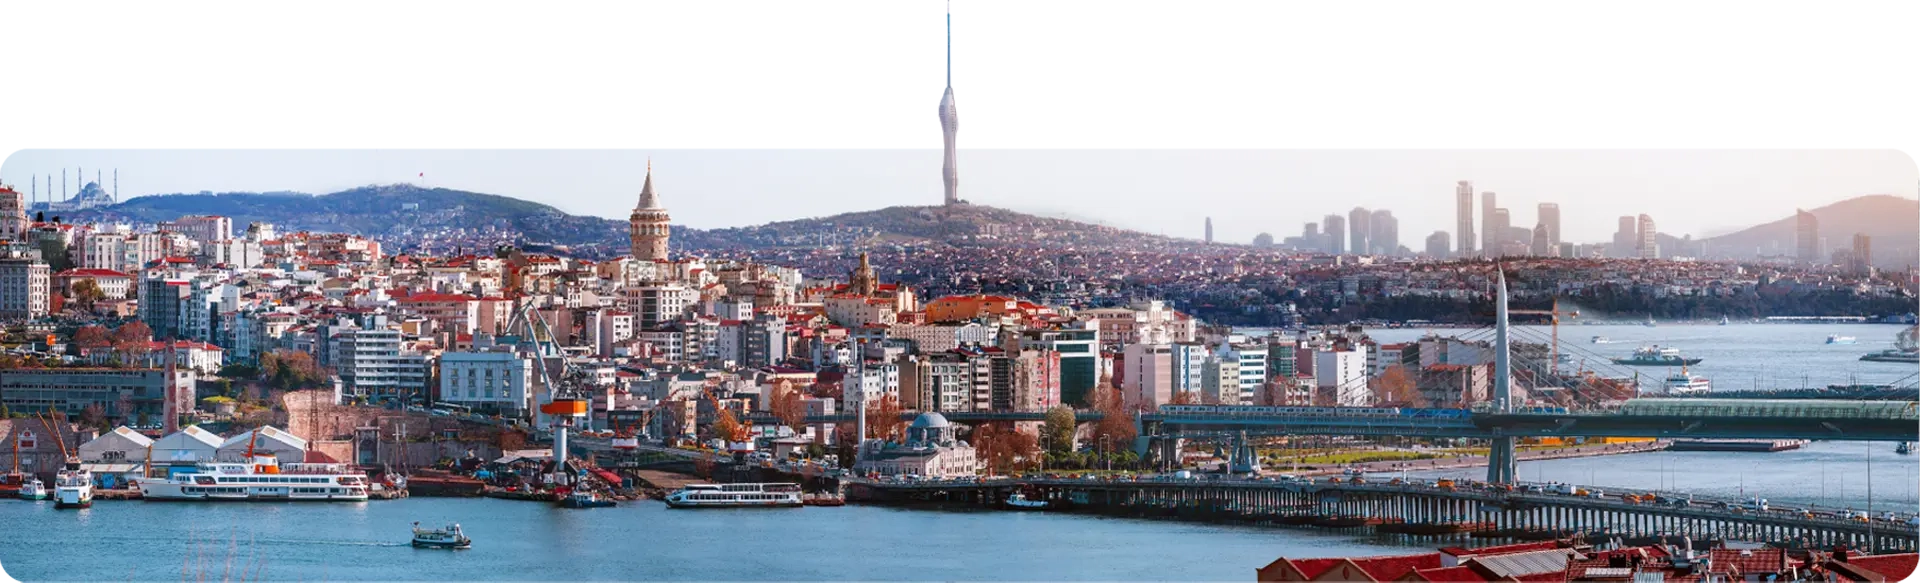 املاک استانبول 2 مادا